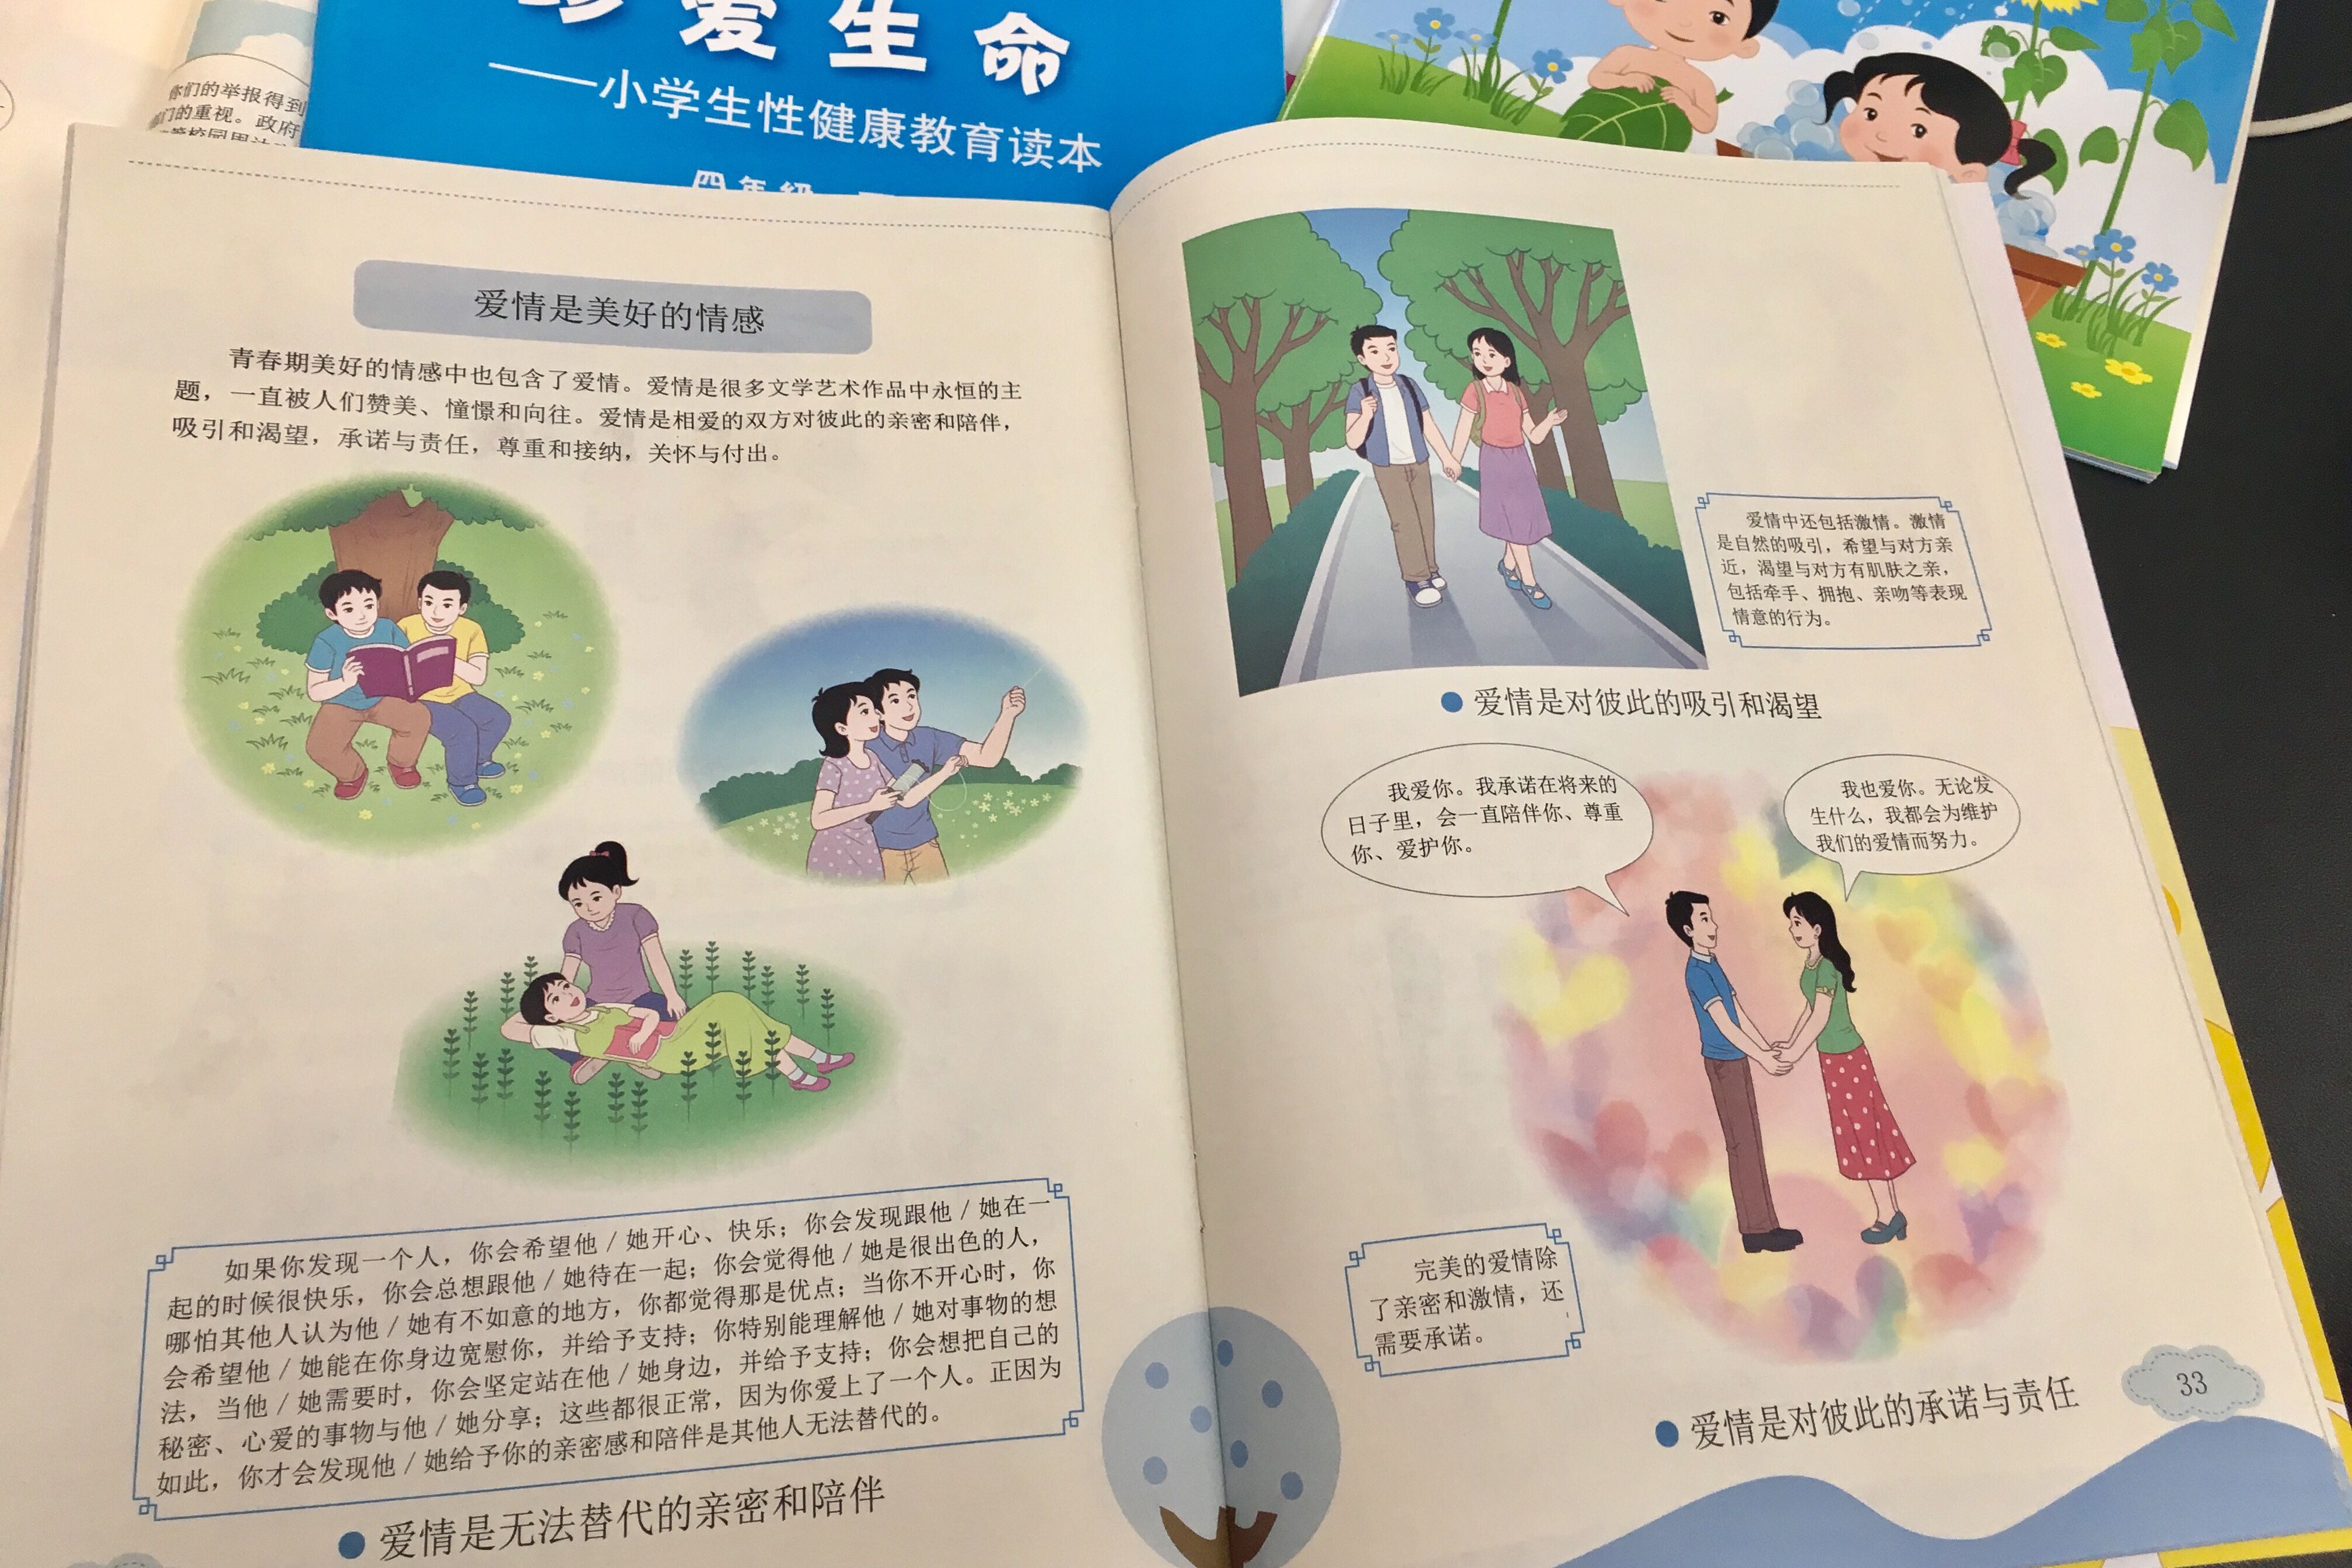 Korean Elementary School Sex - Shock and praise for groundbreaking sex-ed textbook in China | CNN